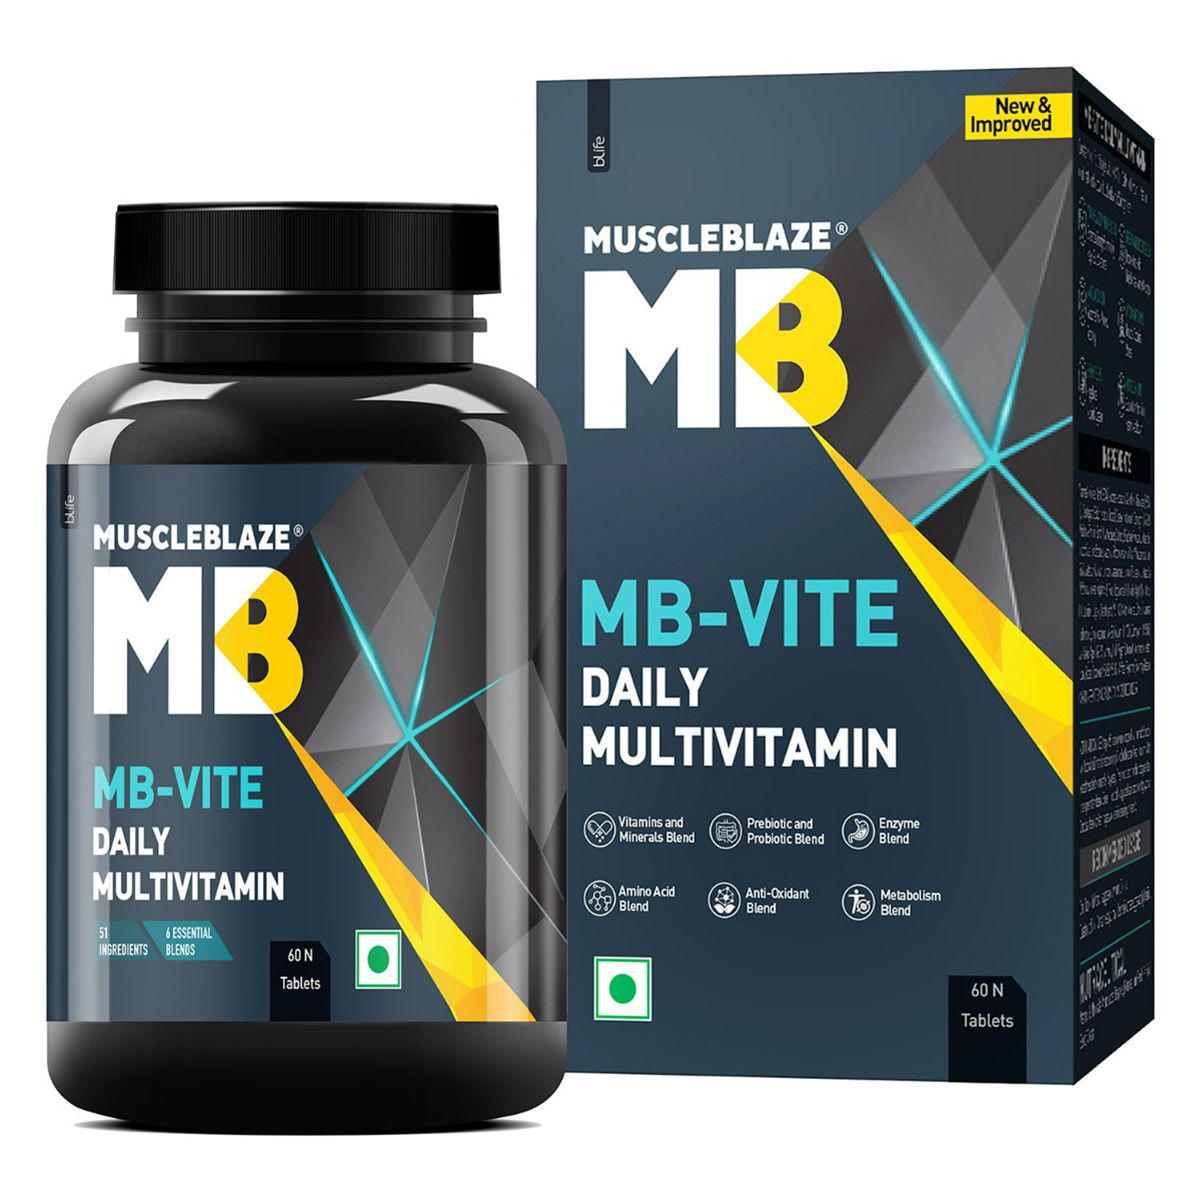 Buy MuscleBlaze MB-VITE Daily Multivitamin, 60 tablets Online